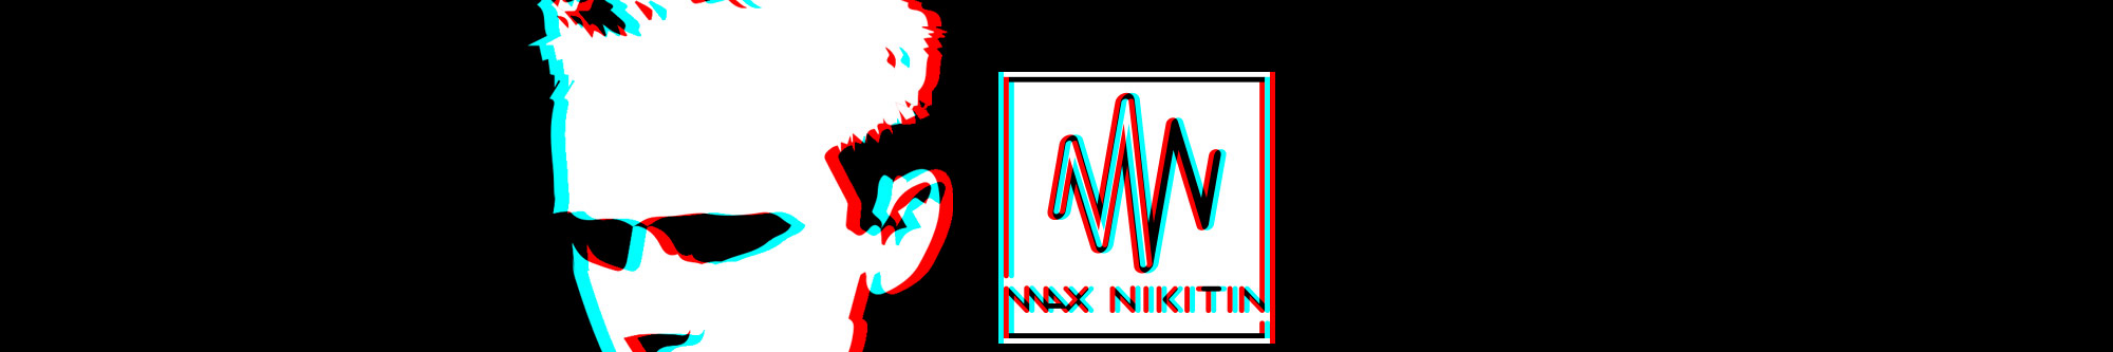 Max Nikitin